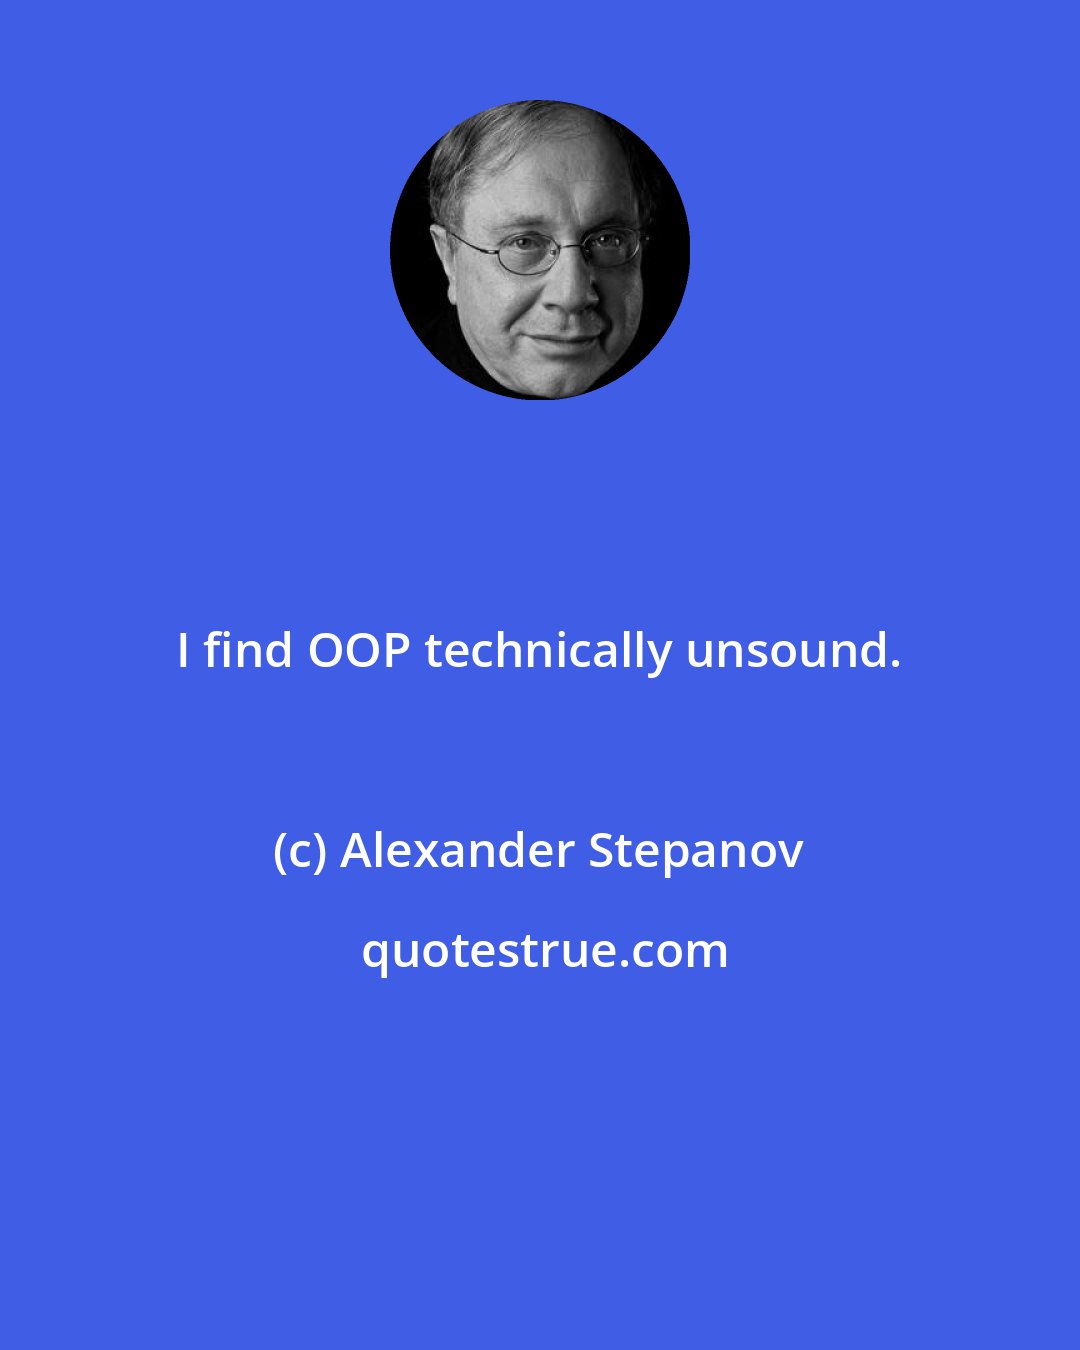 Alexander Stepanov: I find OOP technically unsound.